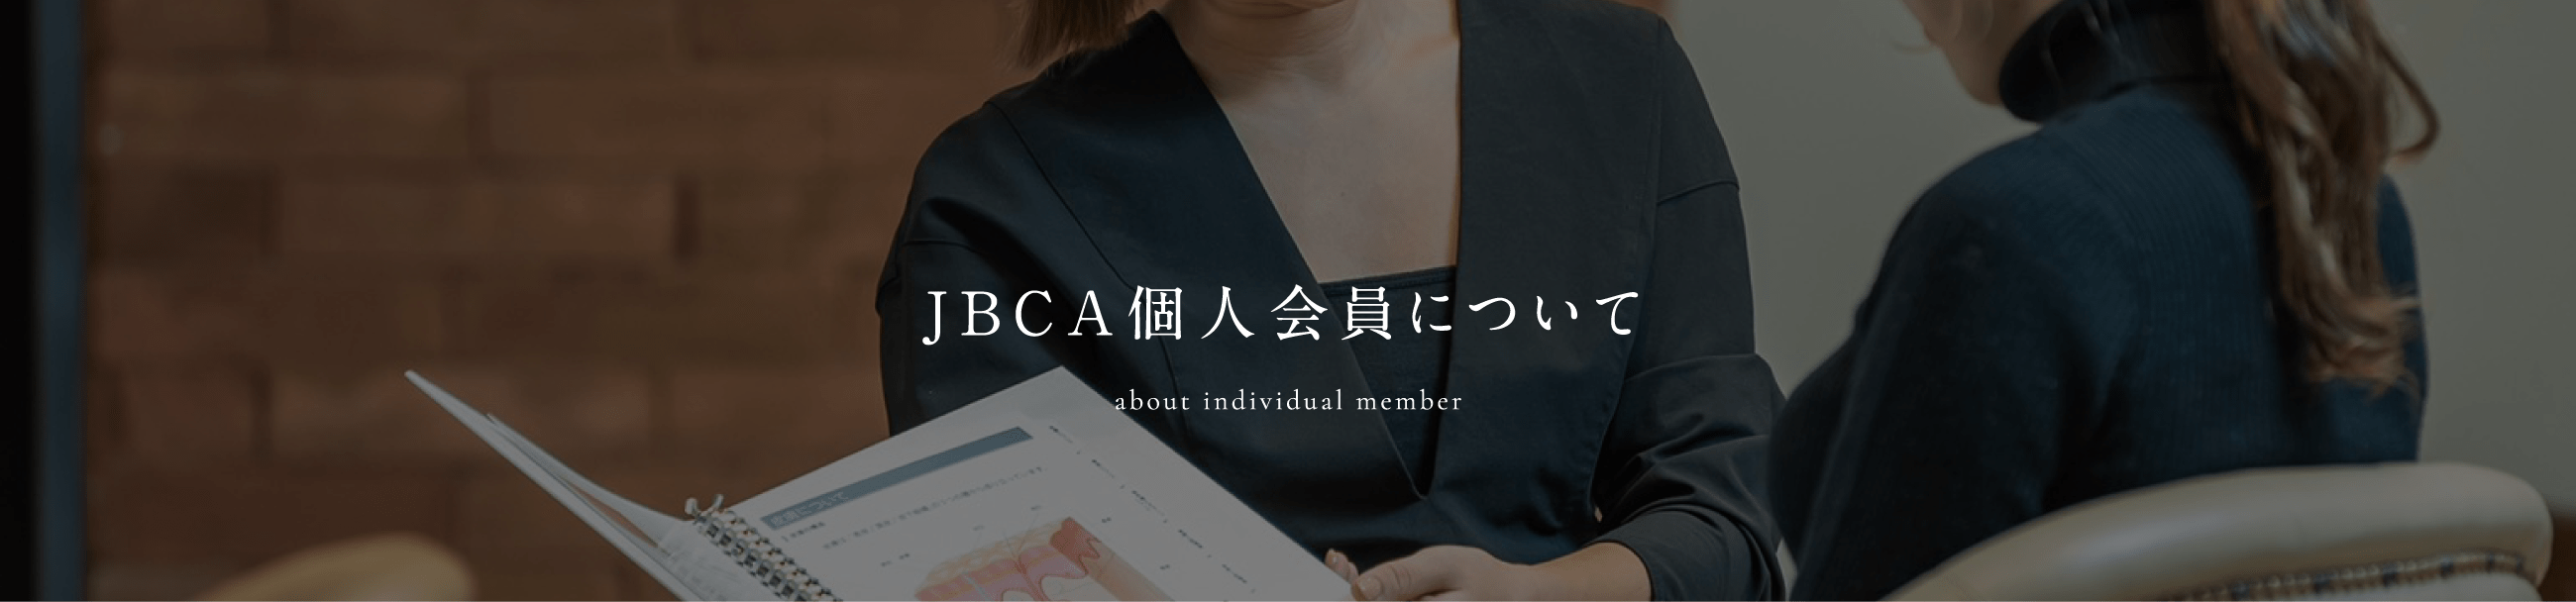 JBCA個人会員について